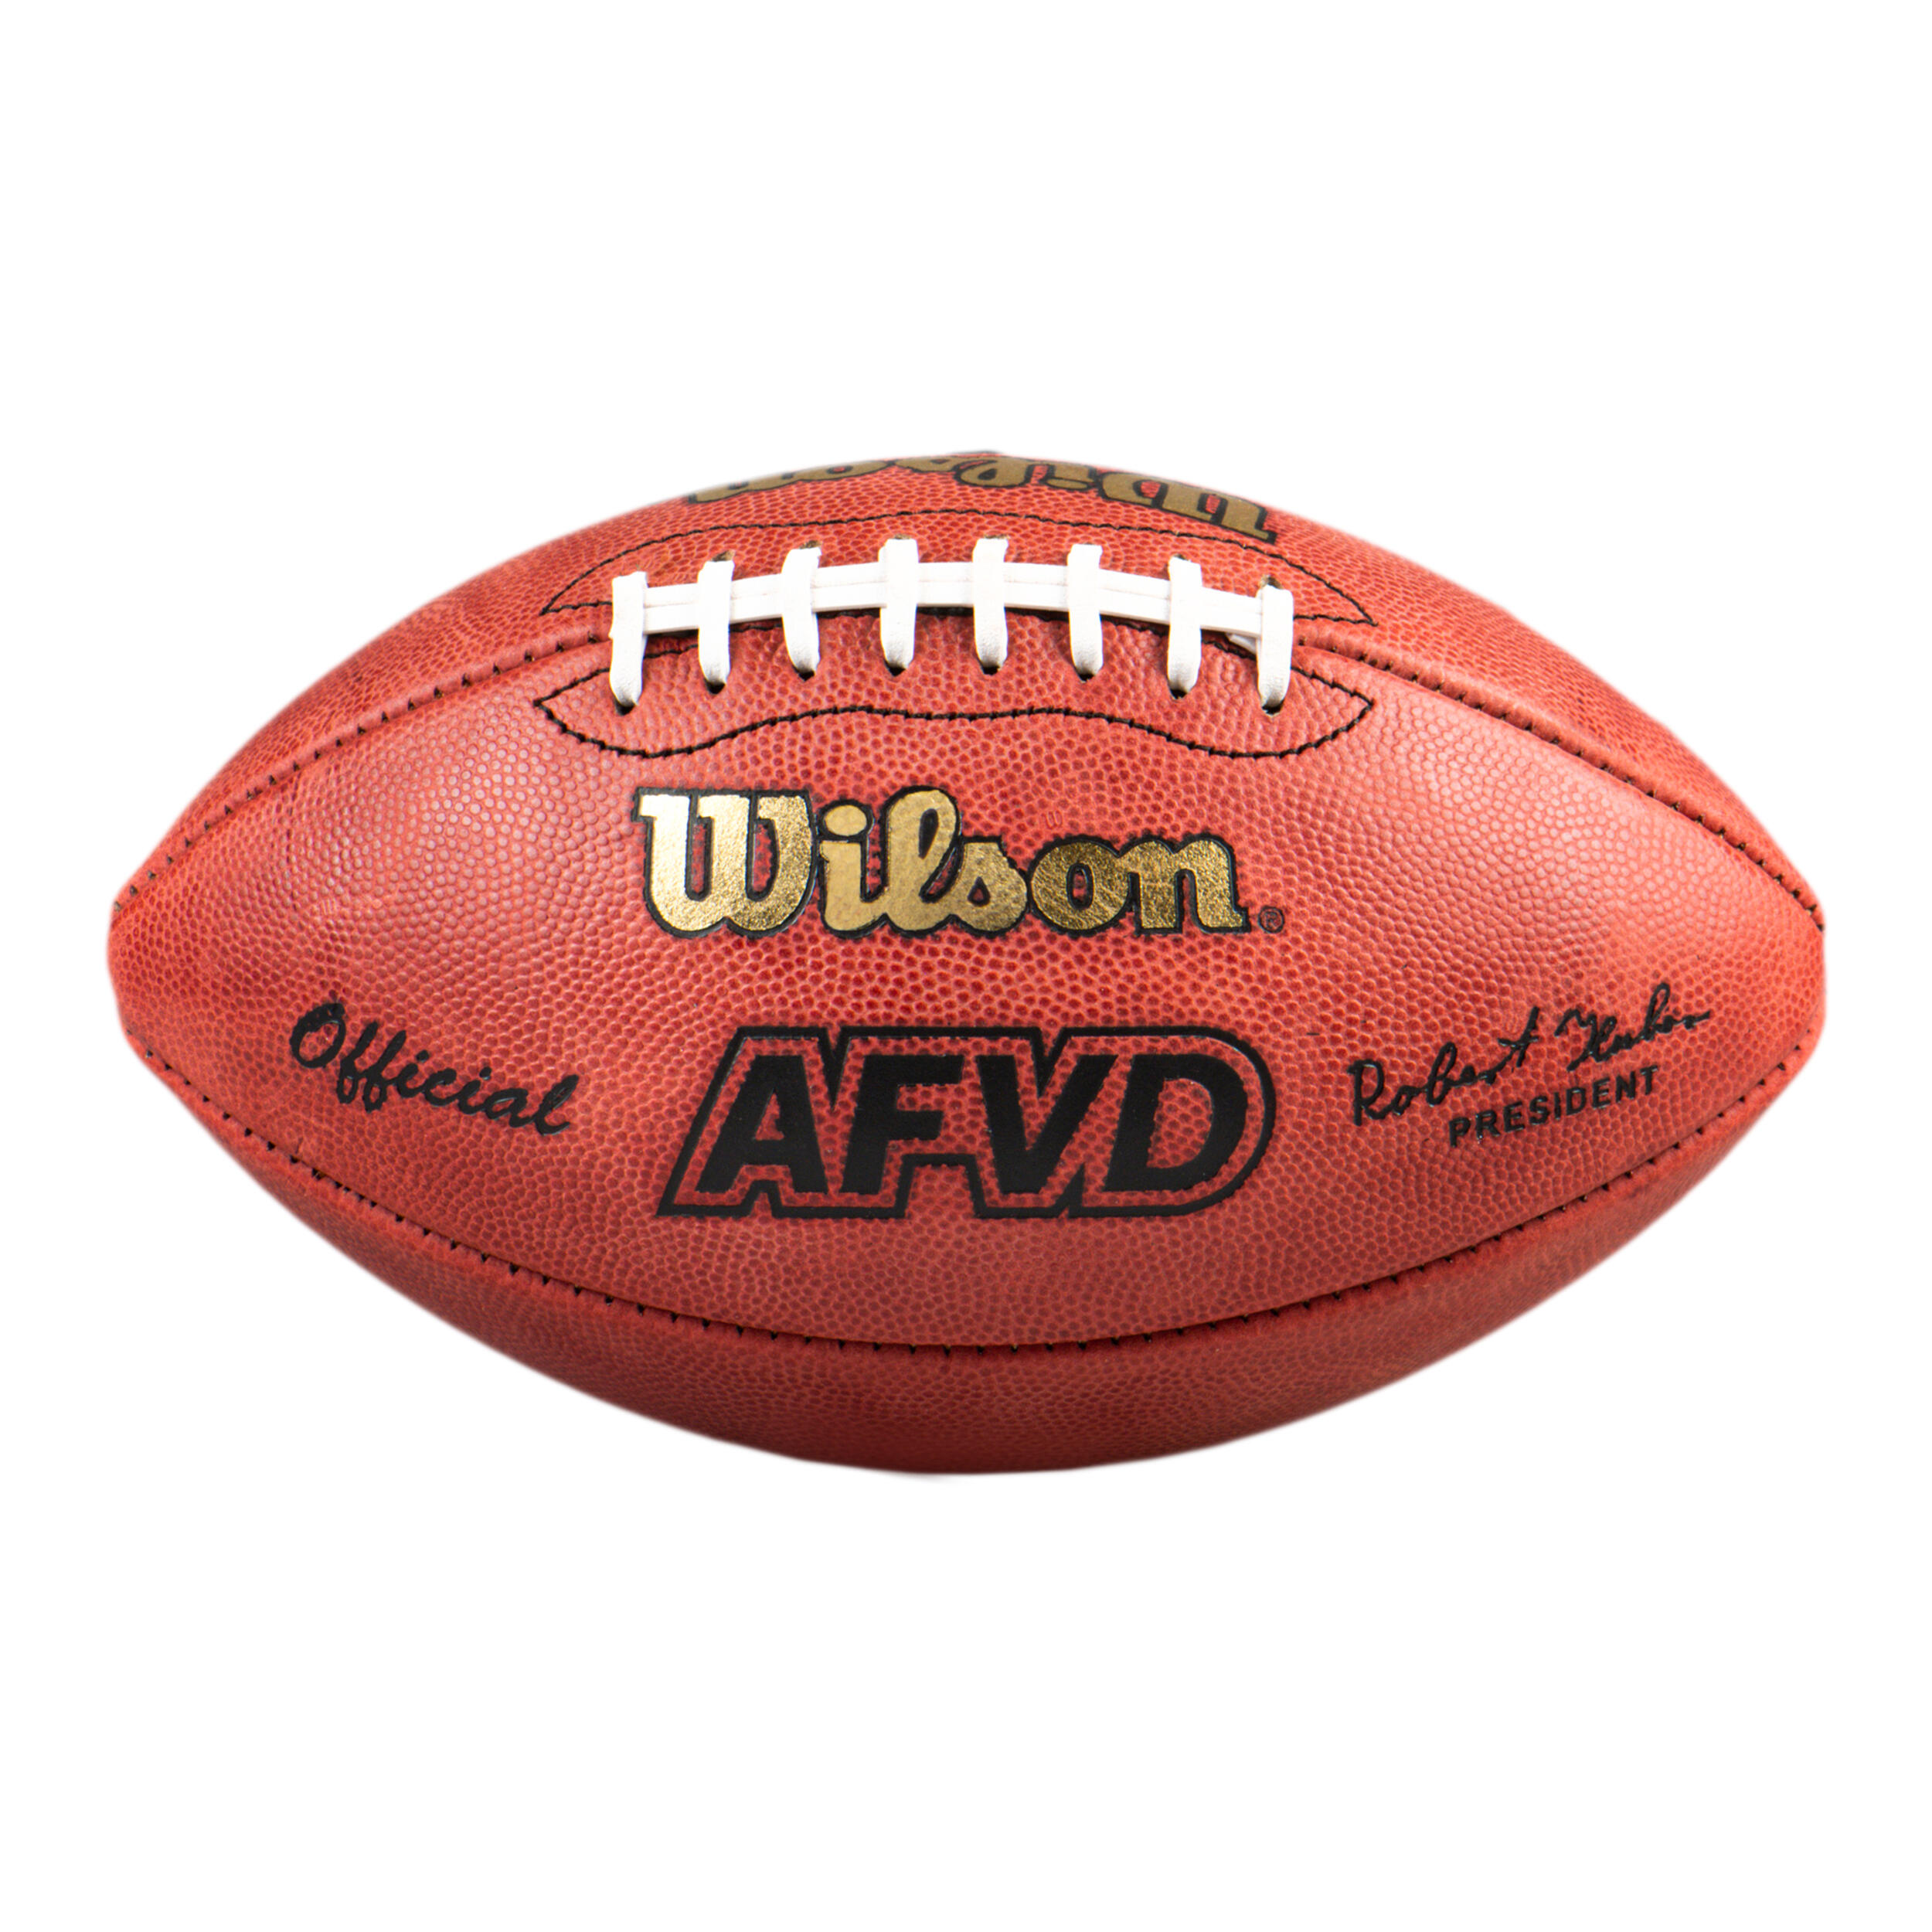 American Football Ball offizielle Grösse – AFVD Game Ball WTF1000 braun